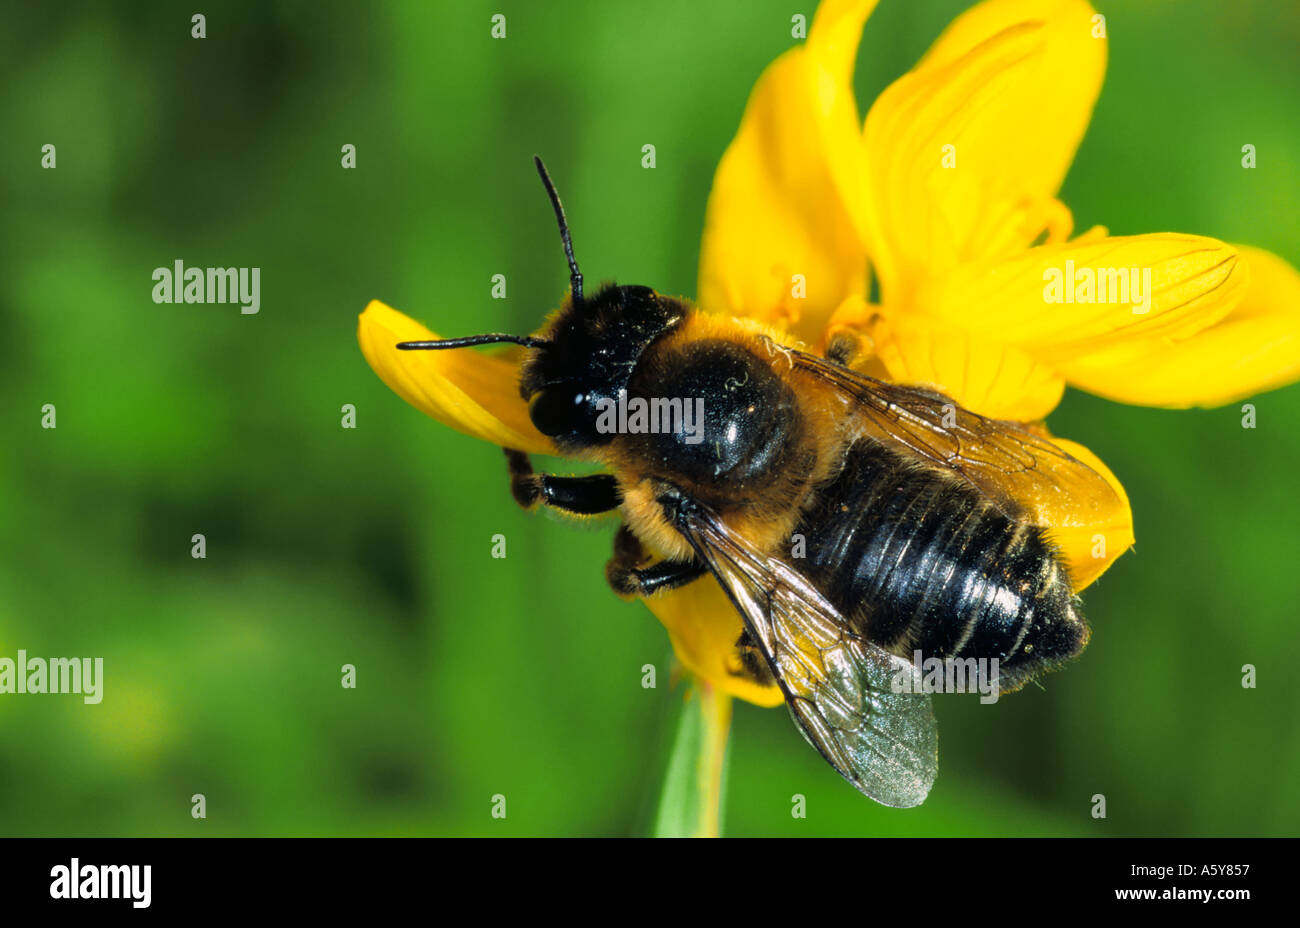 Honey Bee alpis mellifera On Flower in garden potton bedfordshire Stock Photo